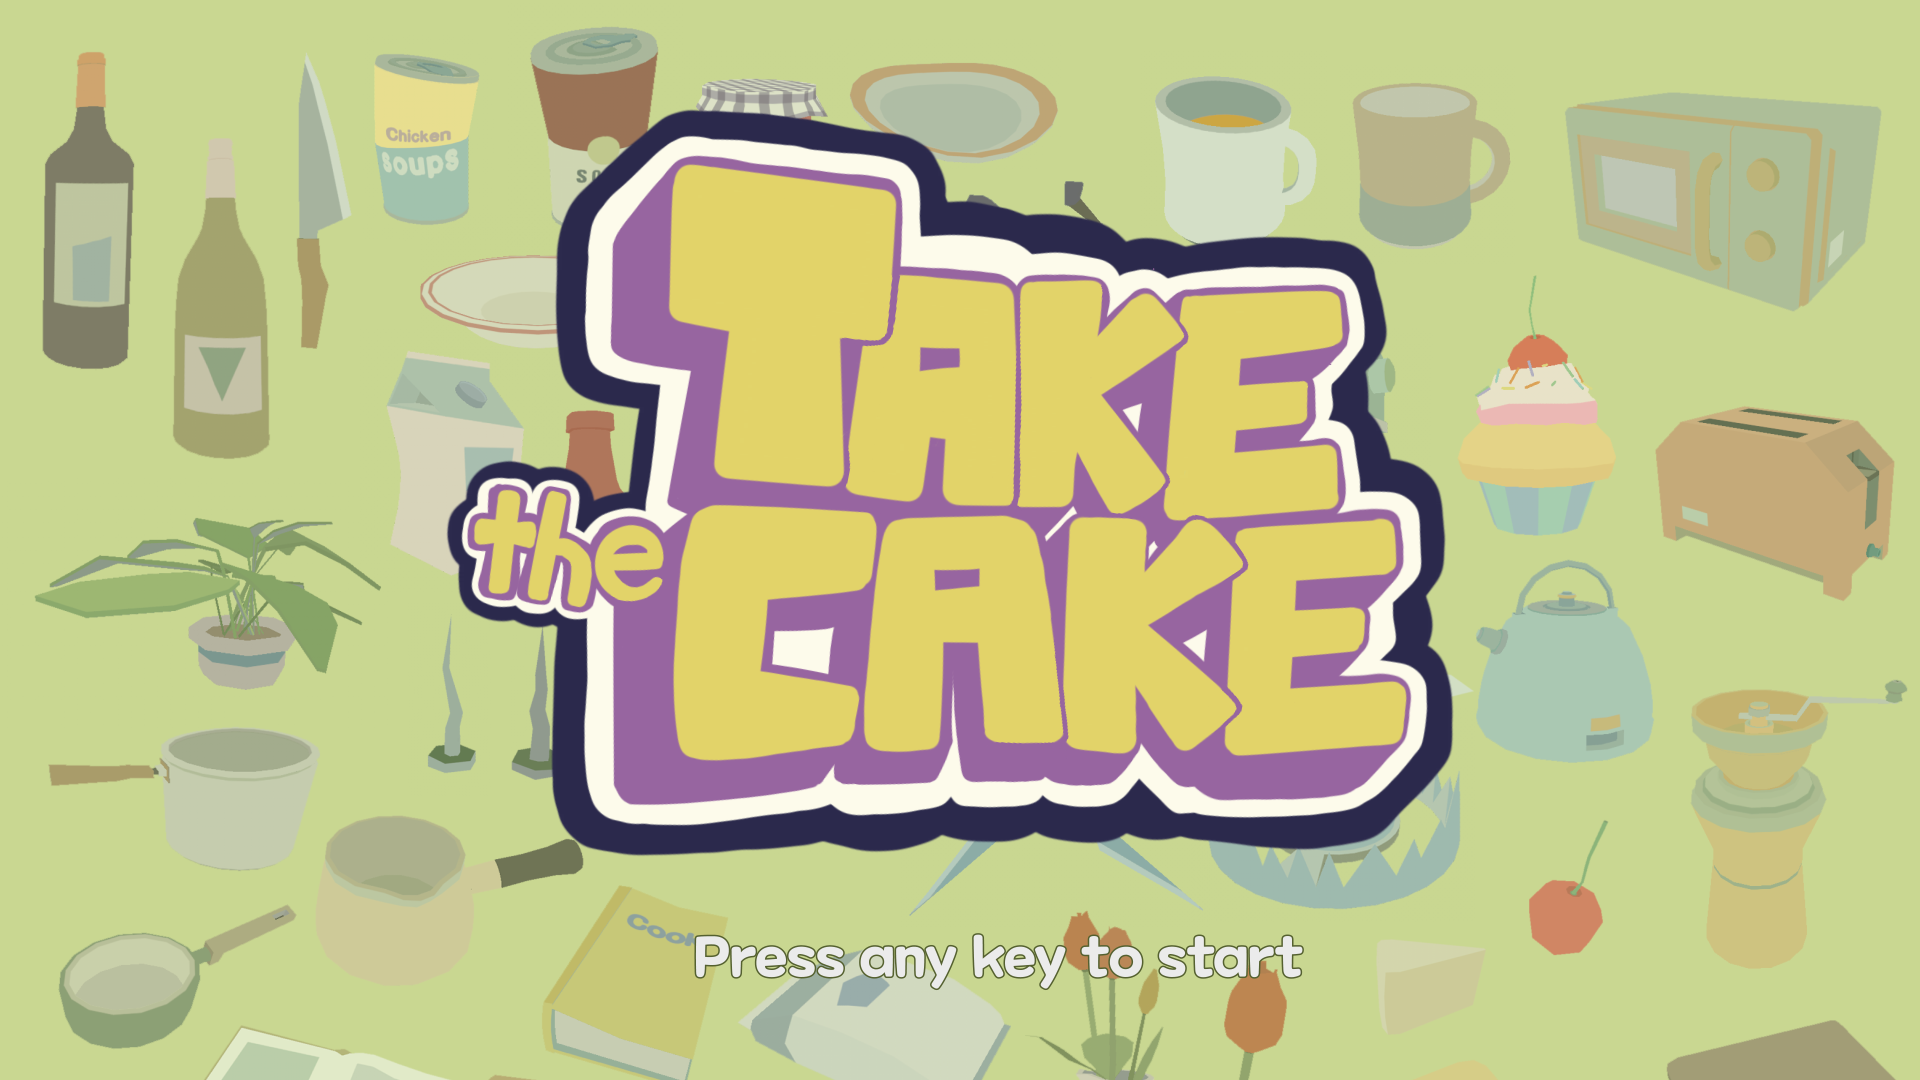 Take The Cake